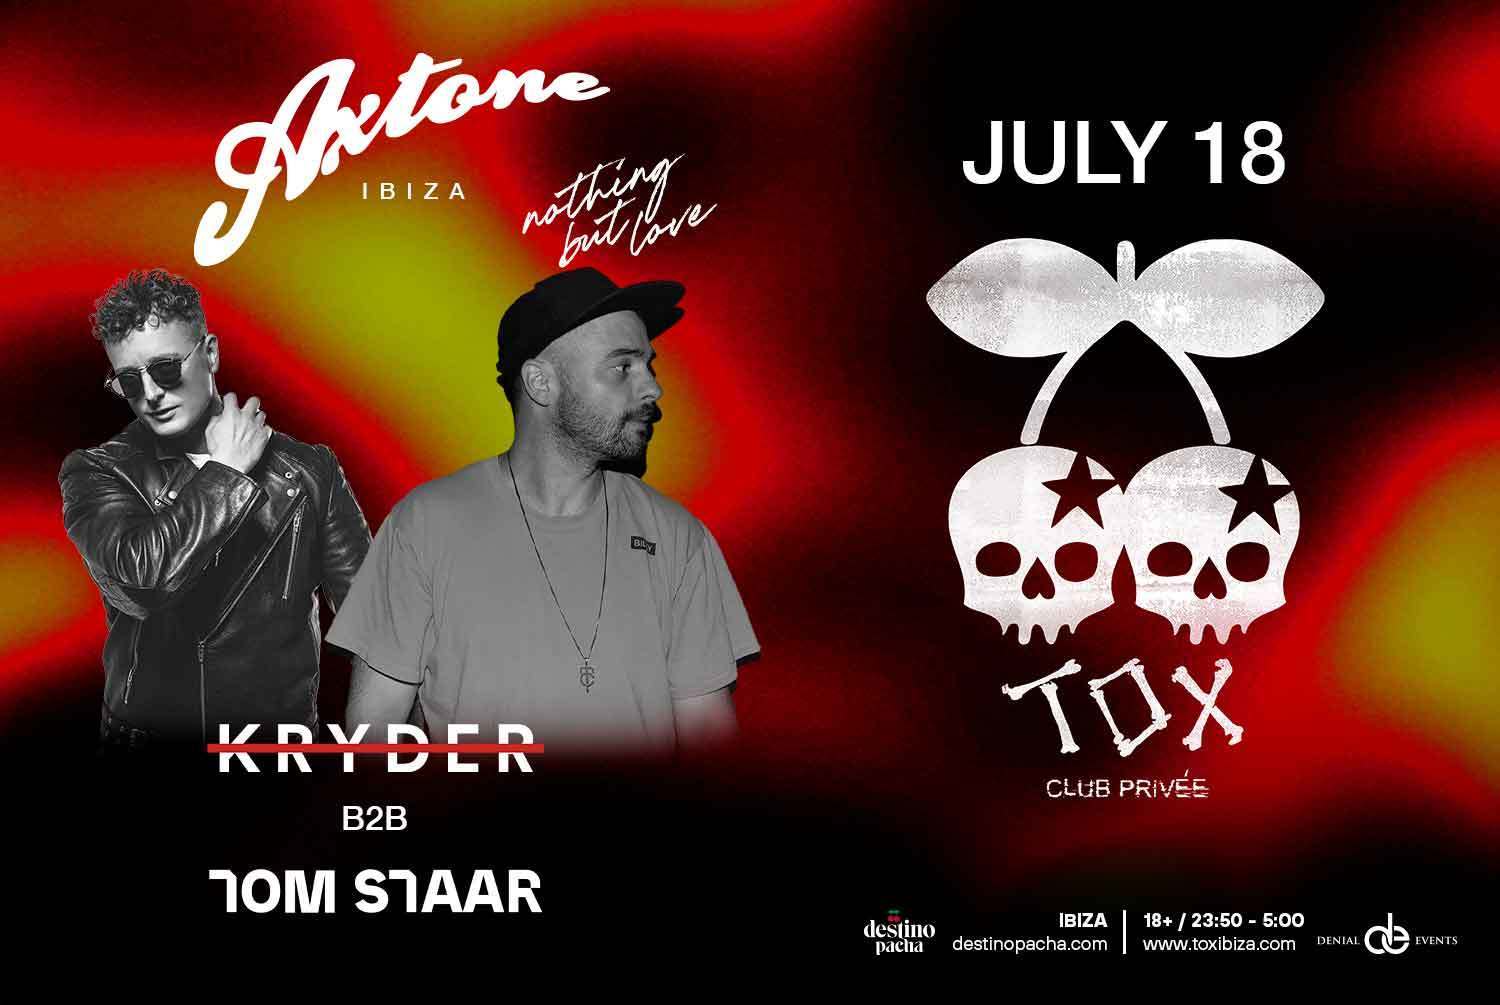 Axtone Summer Tour with Kryder b2b Tom Staar, Cap Martinet, Spain